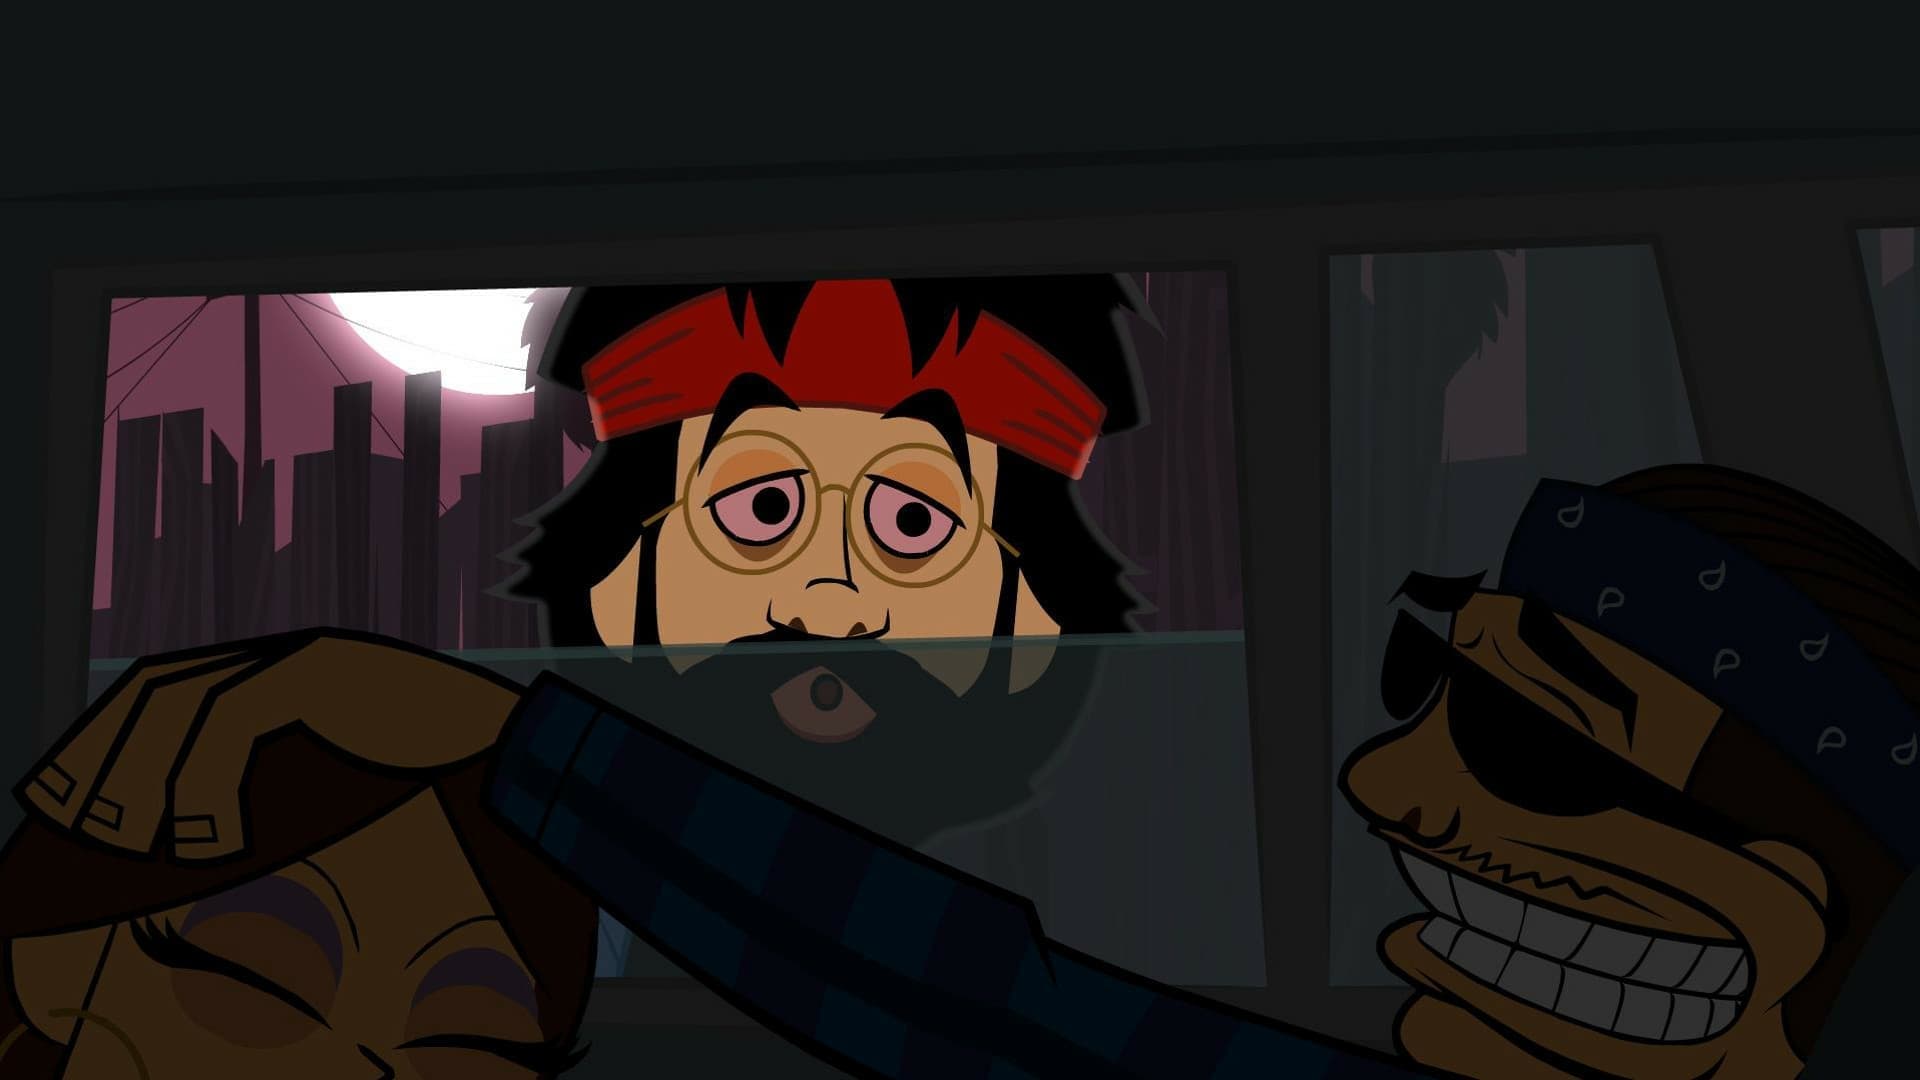 Cheech & Chong's Animated Movie! (2013)